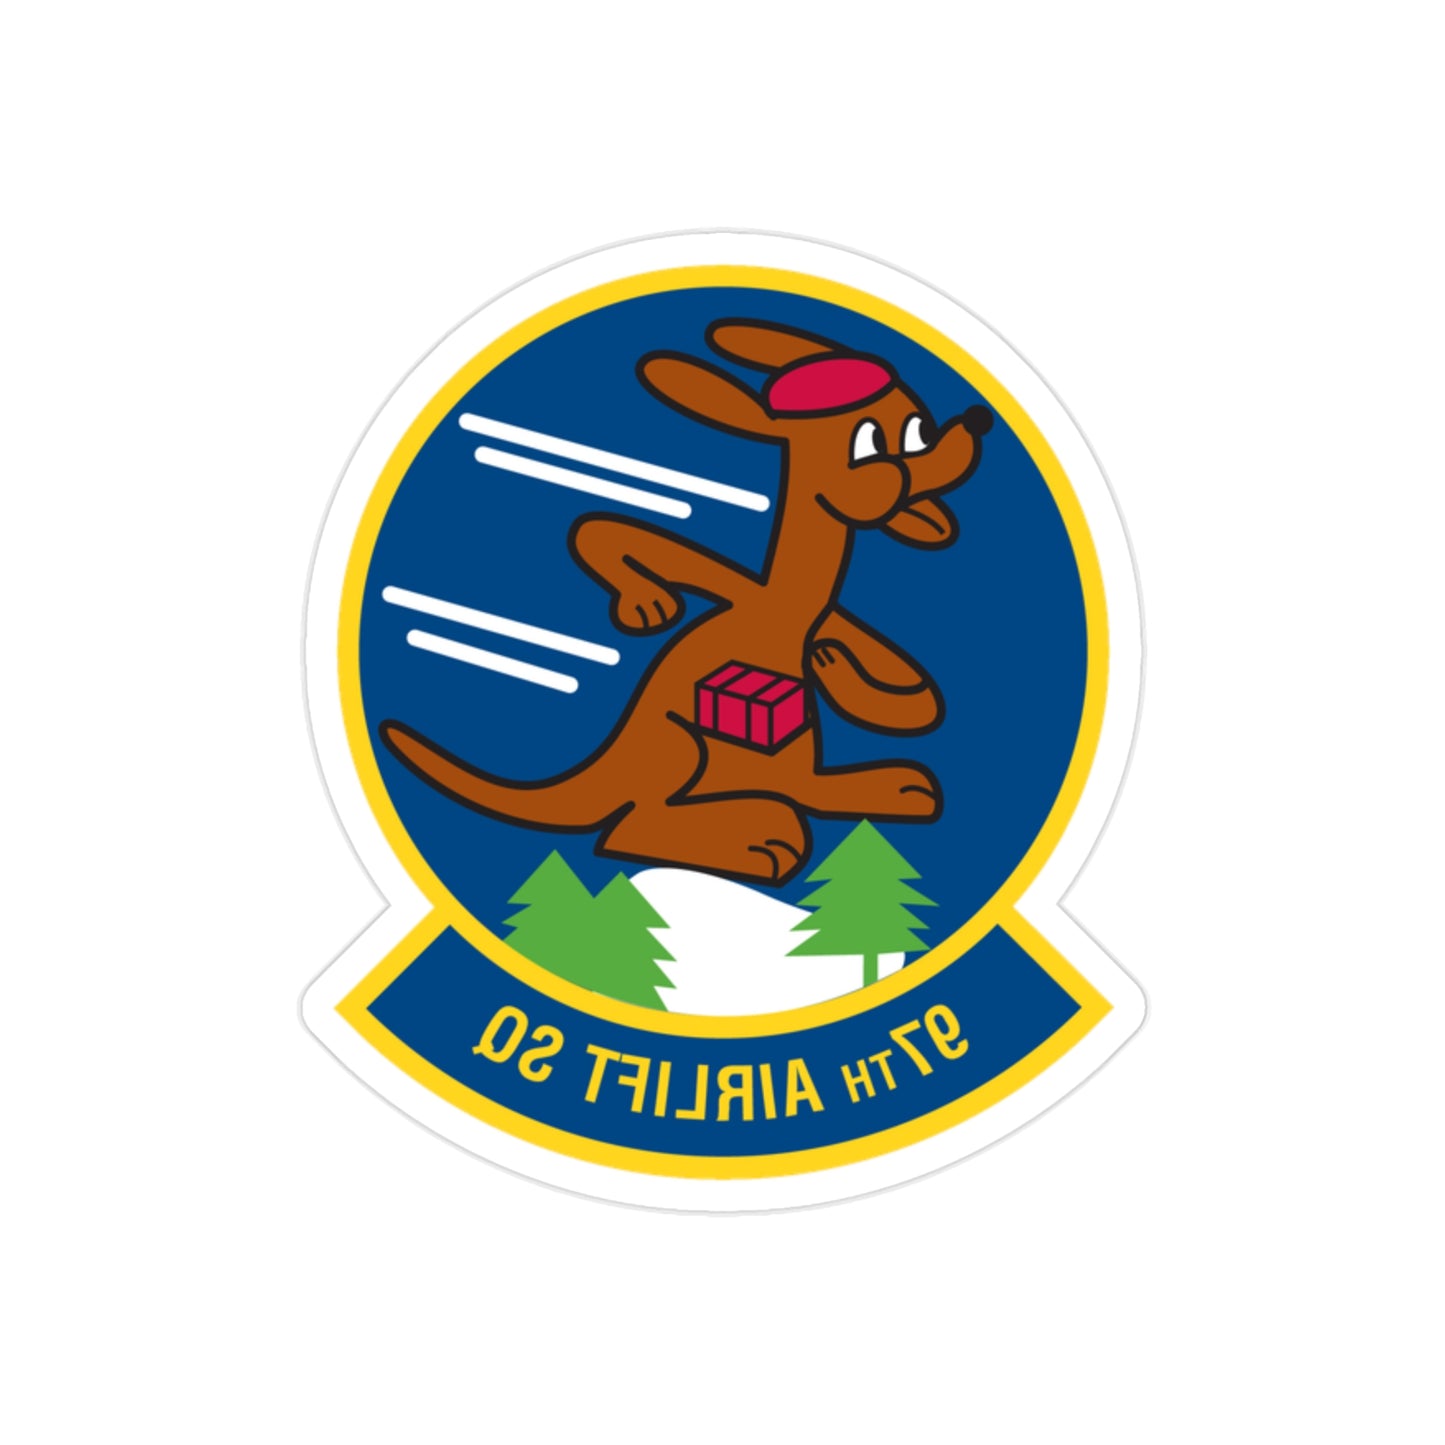 97 Airlift Squadron AFRC (U.S. Air Force) REVERSE PRINT Transparent STICKER